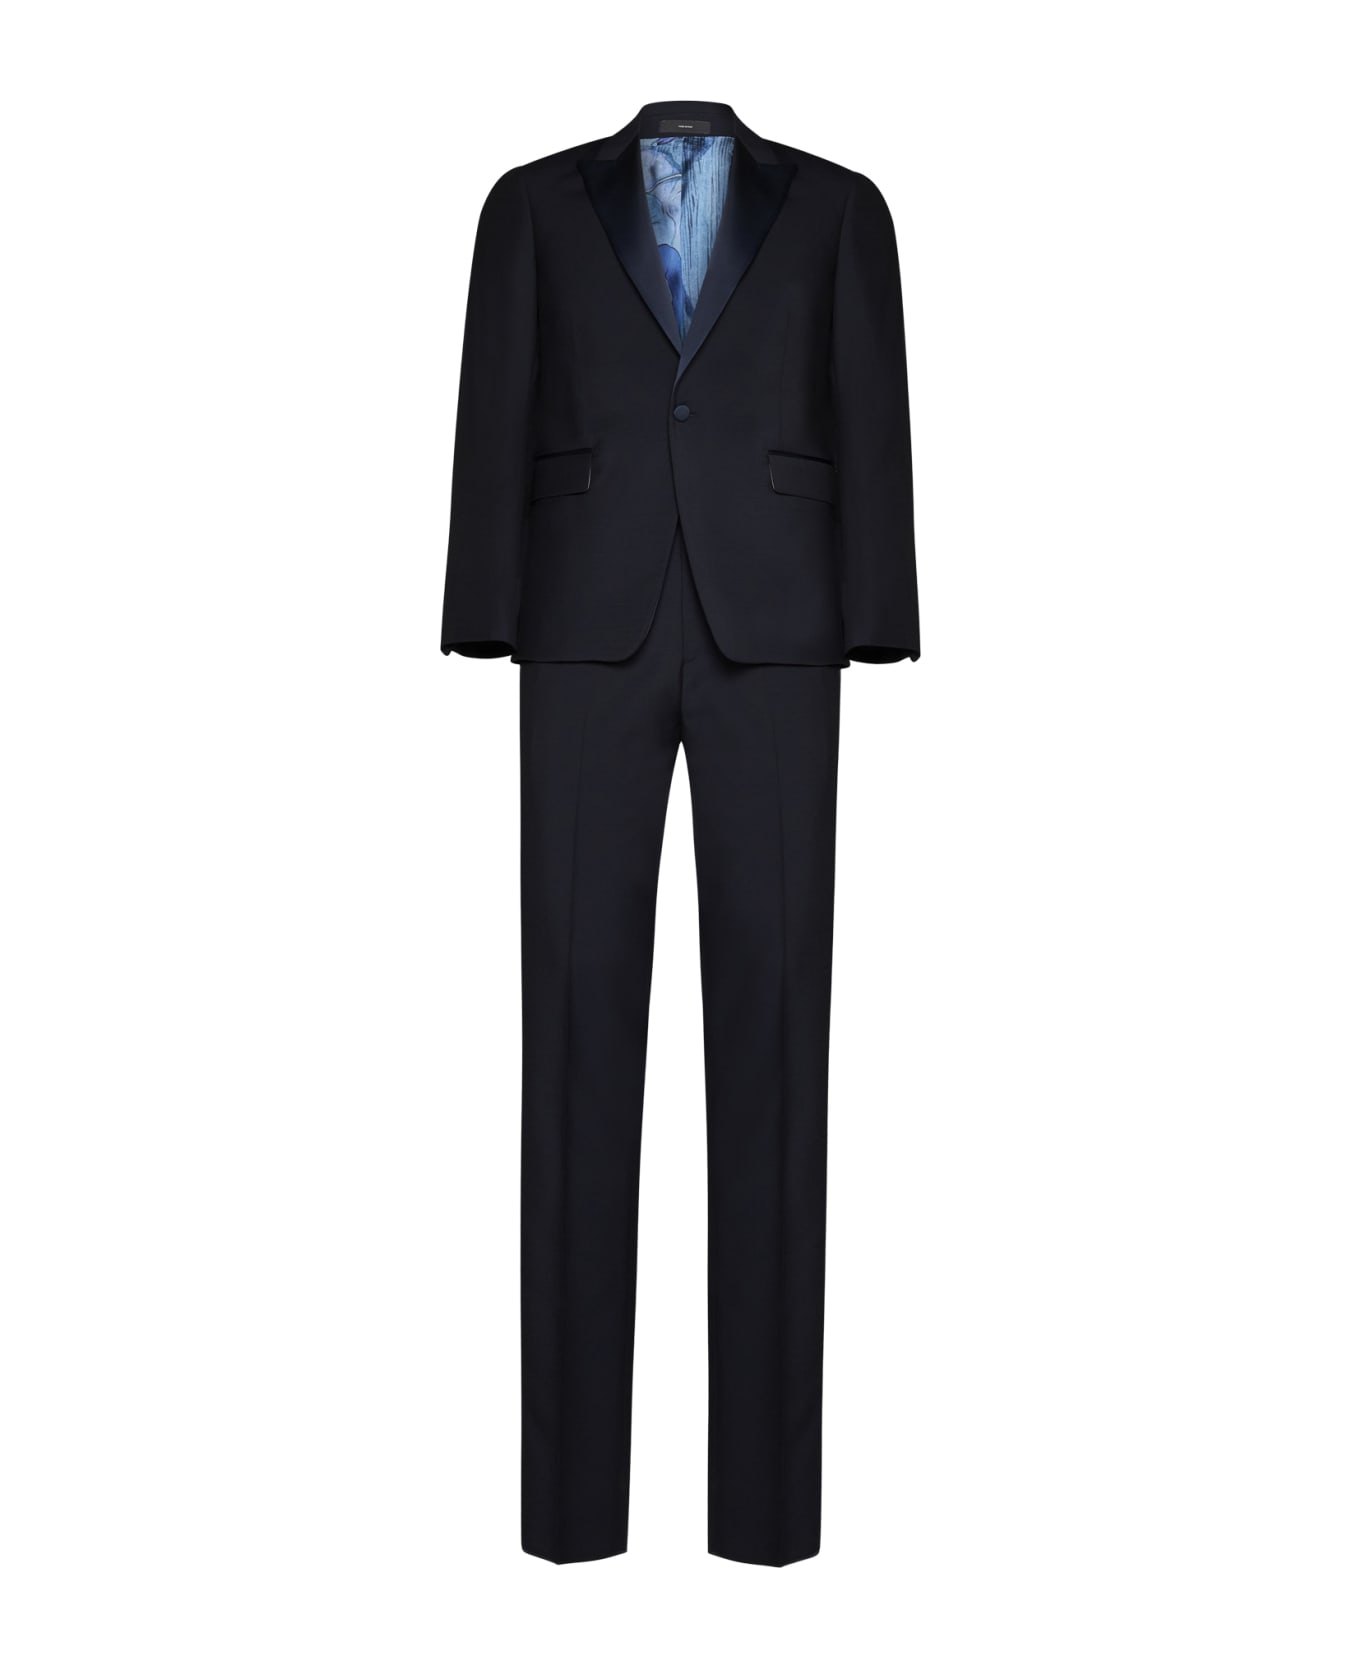 Paul Smith Suit - Dk na スーツ